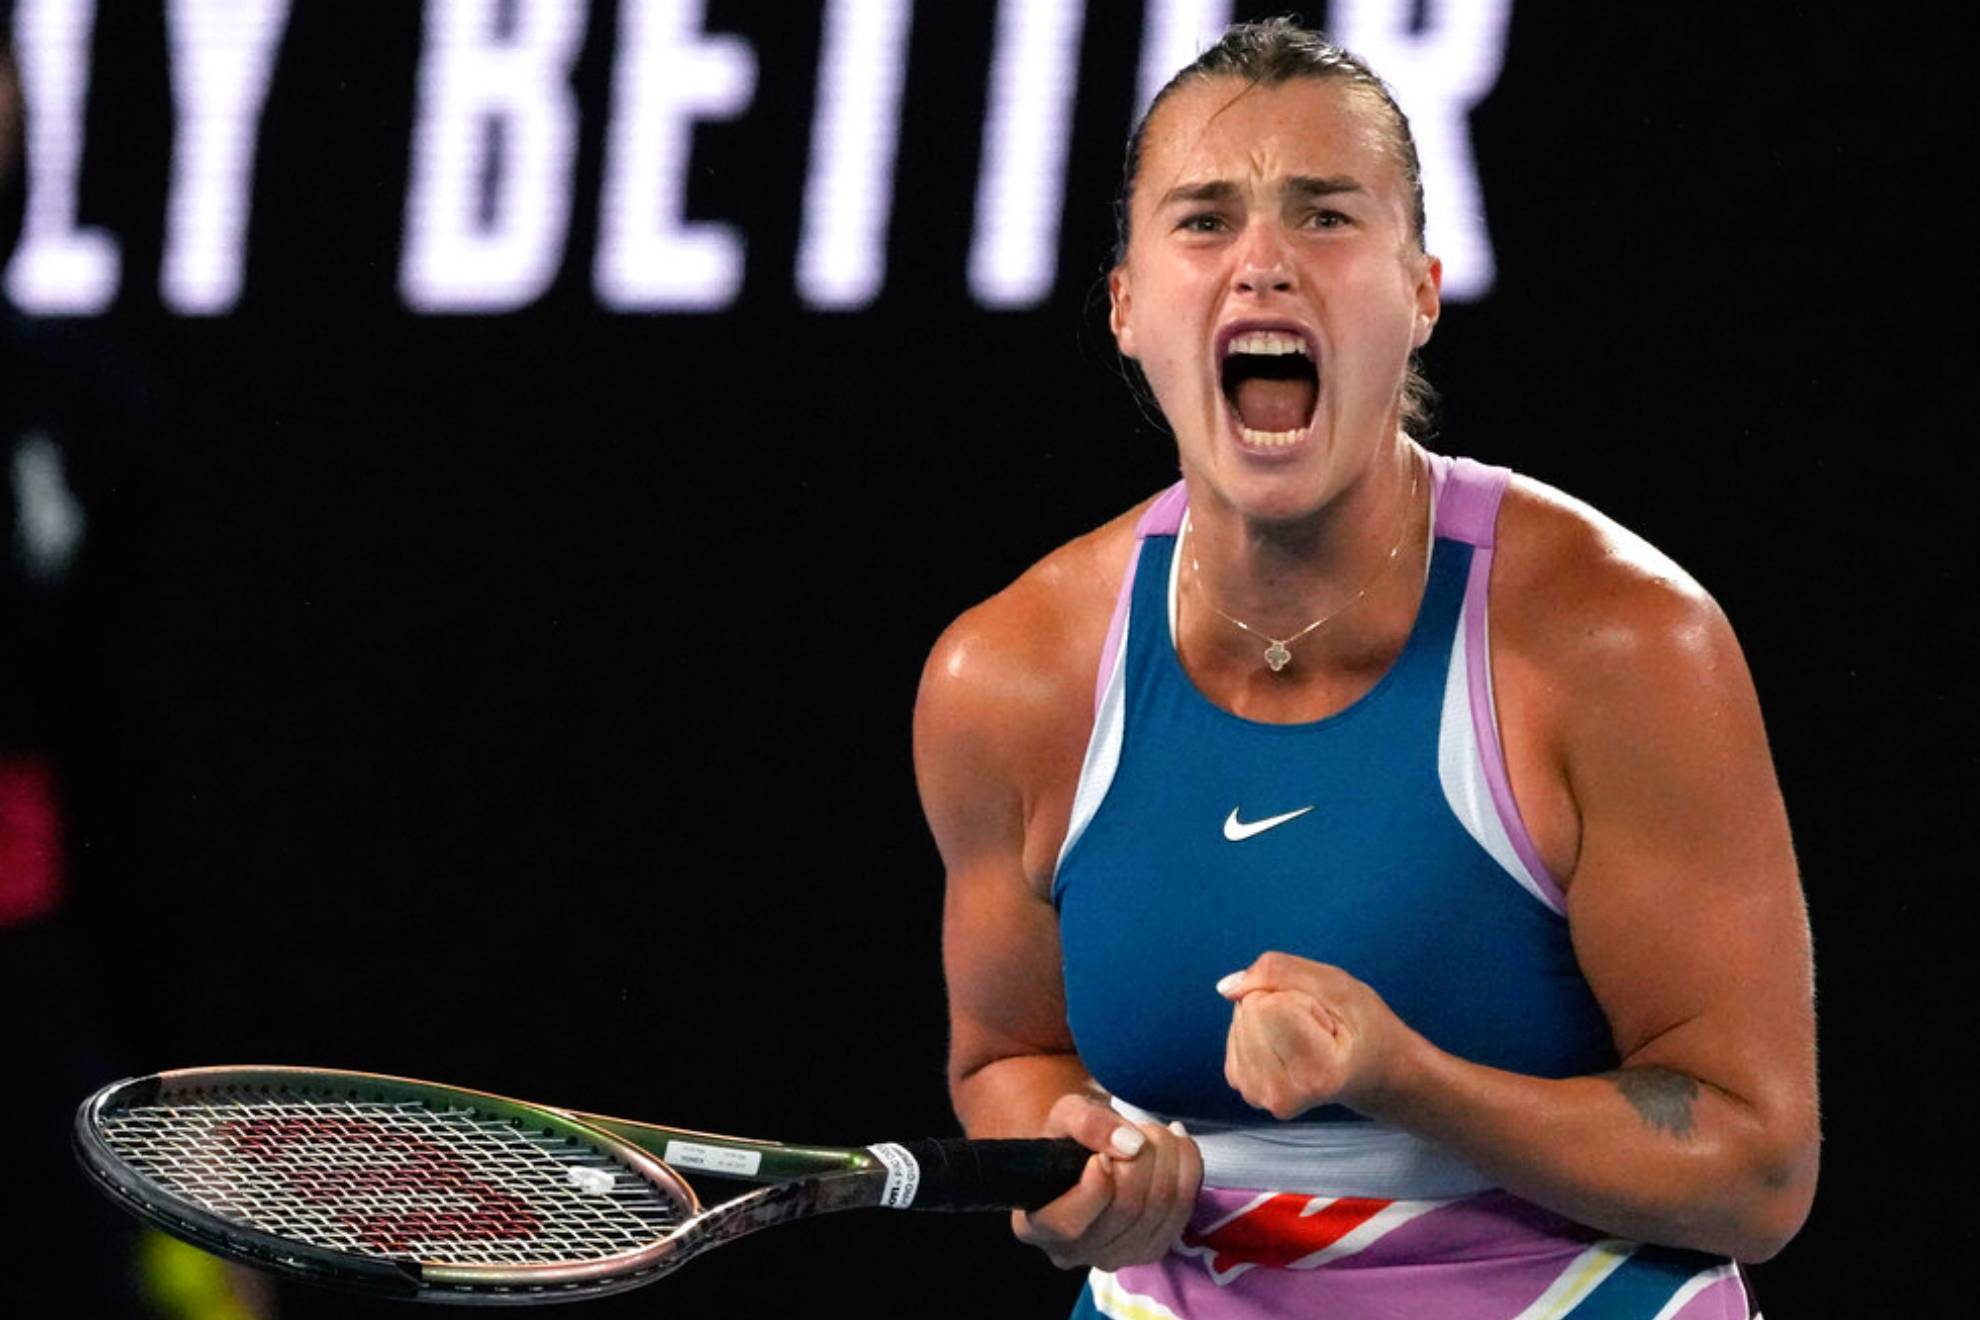 Aryna Sabalenka of Belarus reacts after winning a point against Elena Rybakina of Kazakhstan in the womens singles final at the Australian Open tennis championship in Melbourne, Australia